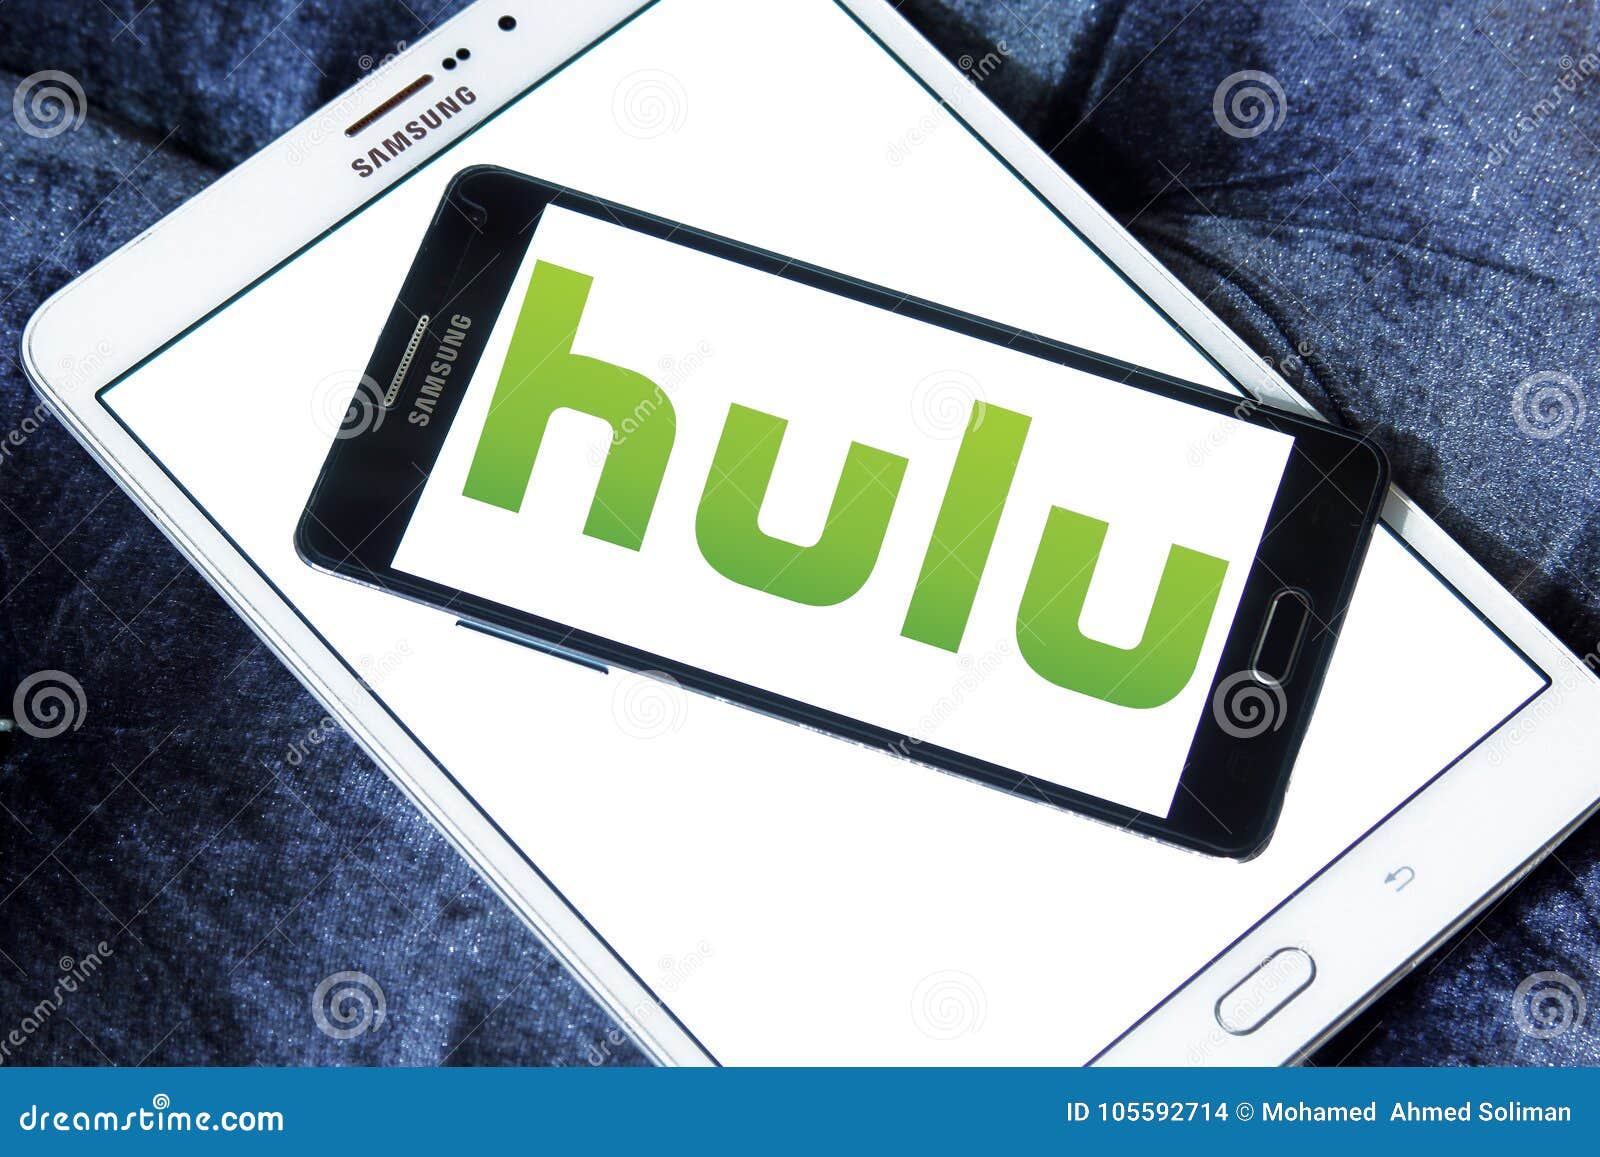 Hulu company logo editorial stock image